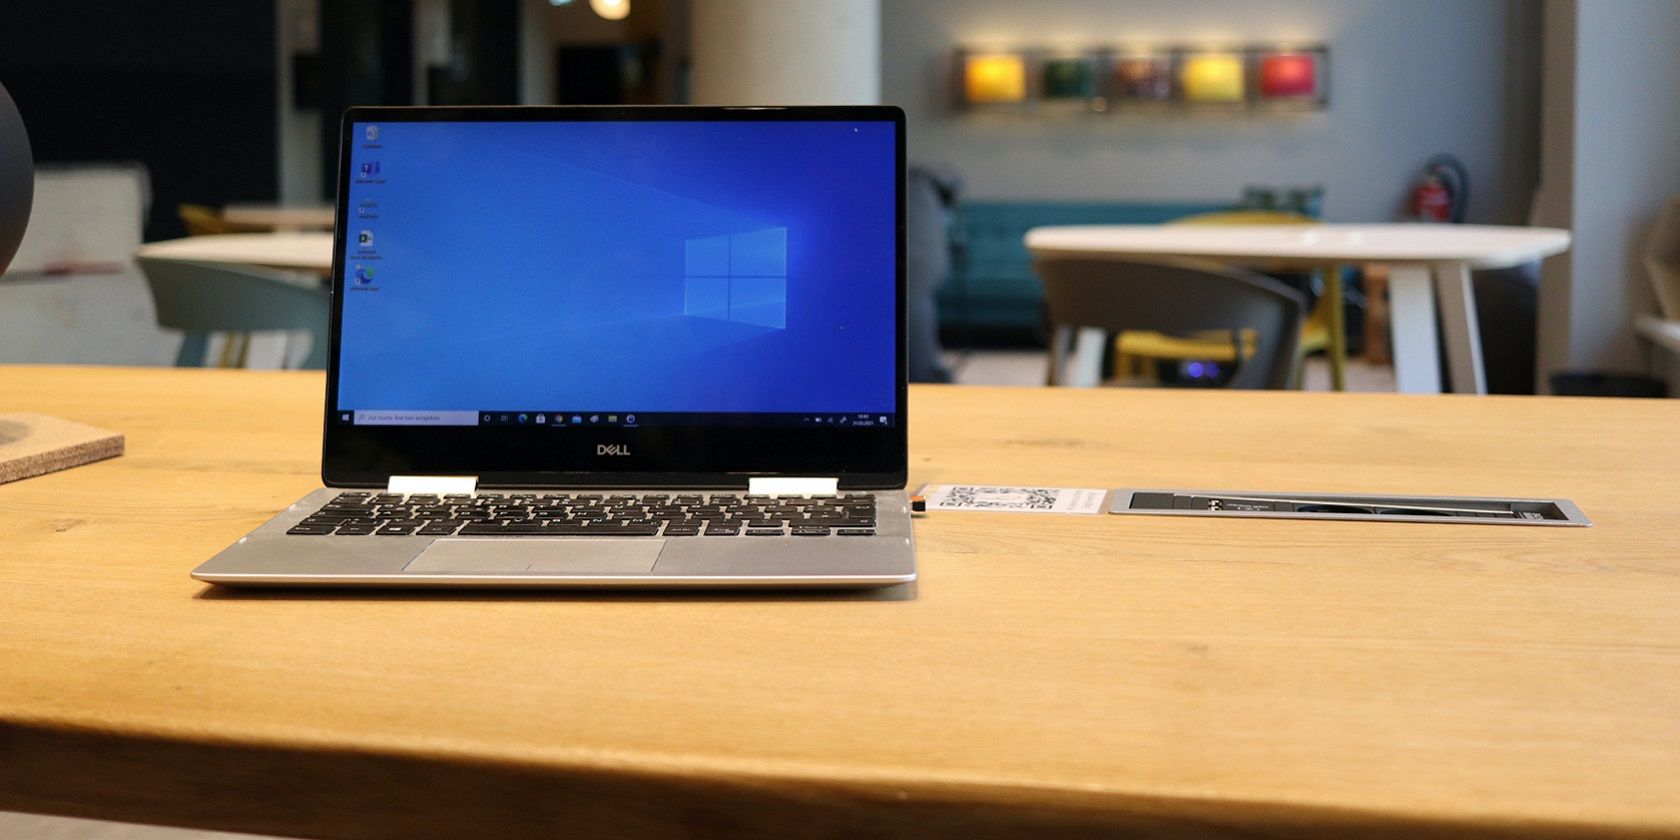 A Windows 10 laptop 